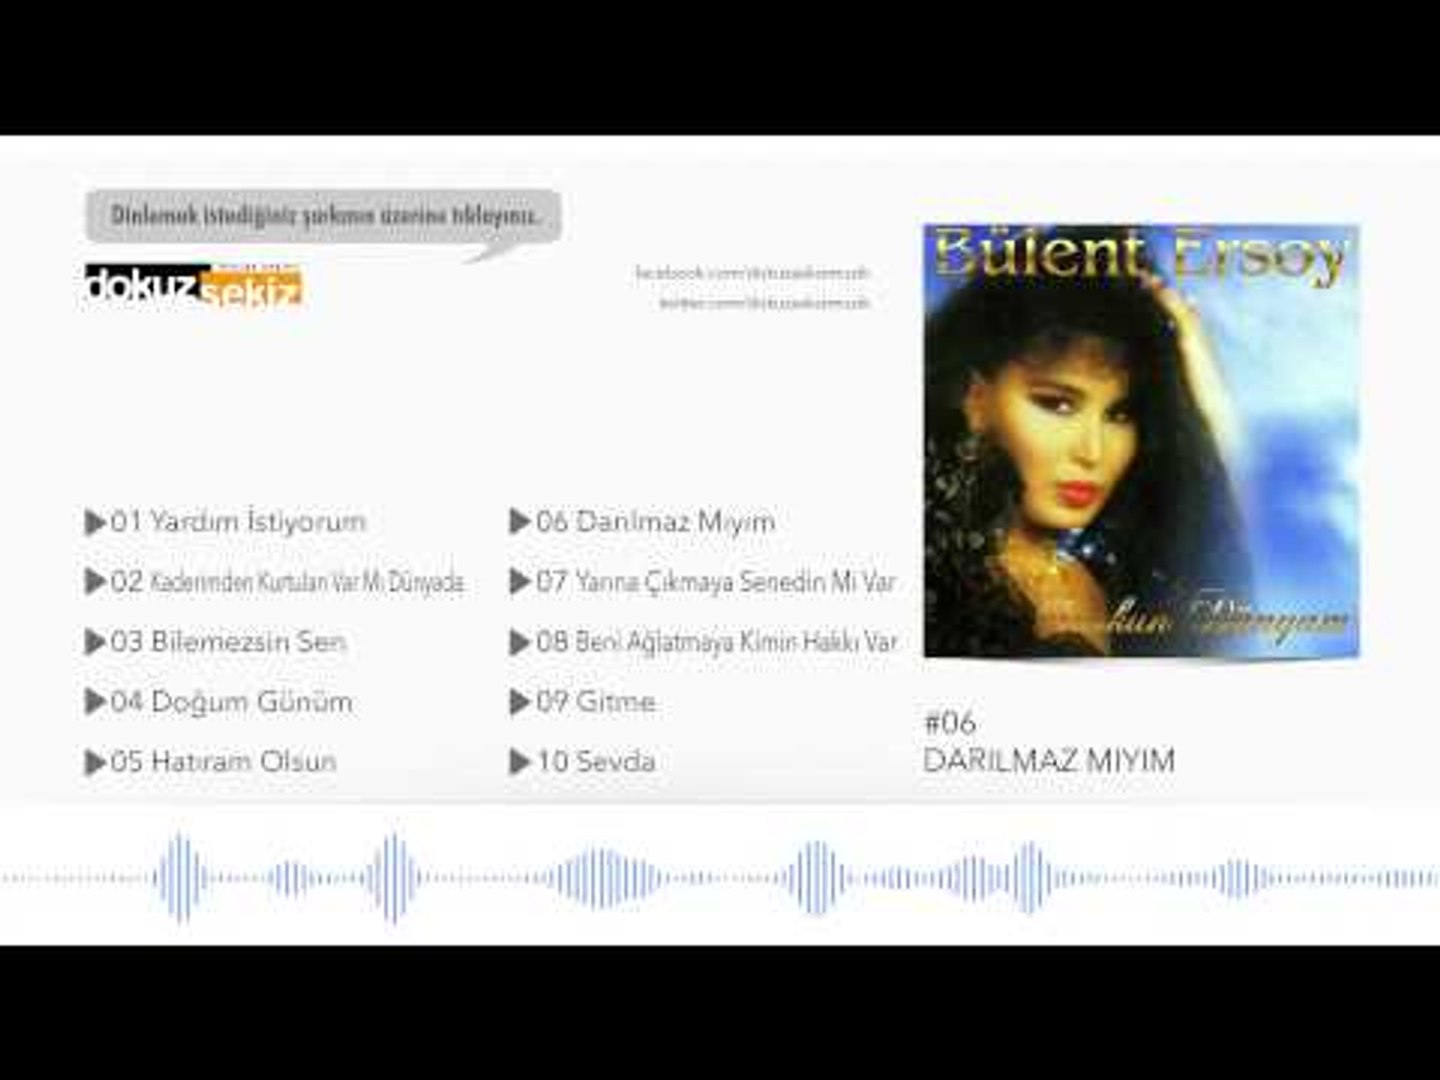 Bulent Ersoy Darilmaz Miyim Official Audio Dailymotion Video